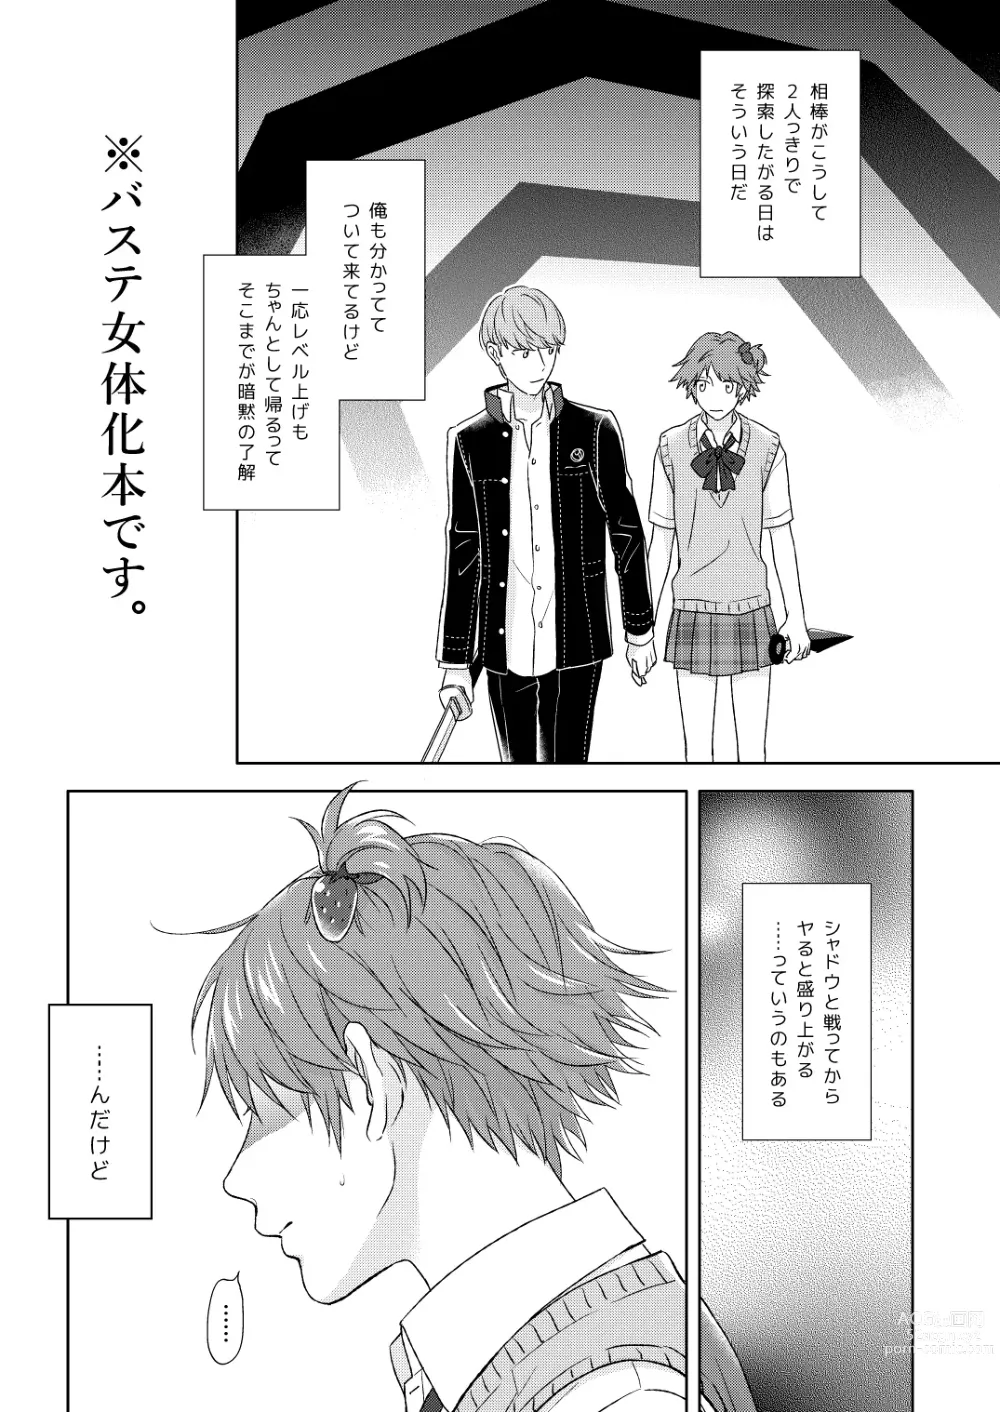 Page 2 of doujinshi Onna no ko basute(Persona 4)sample